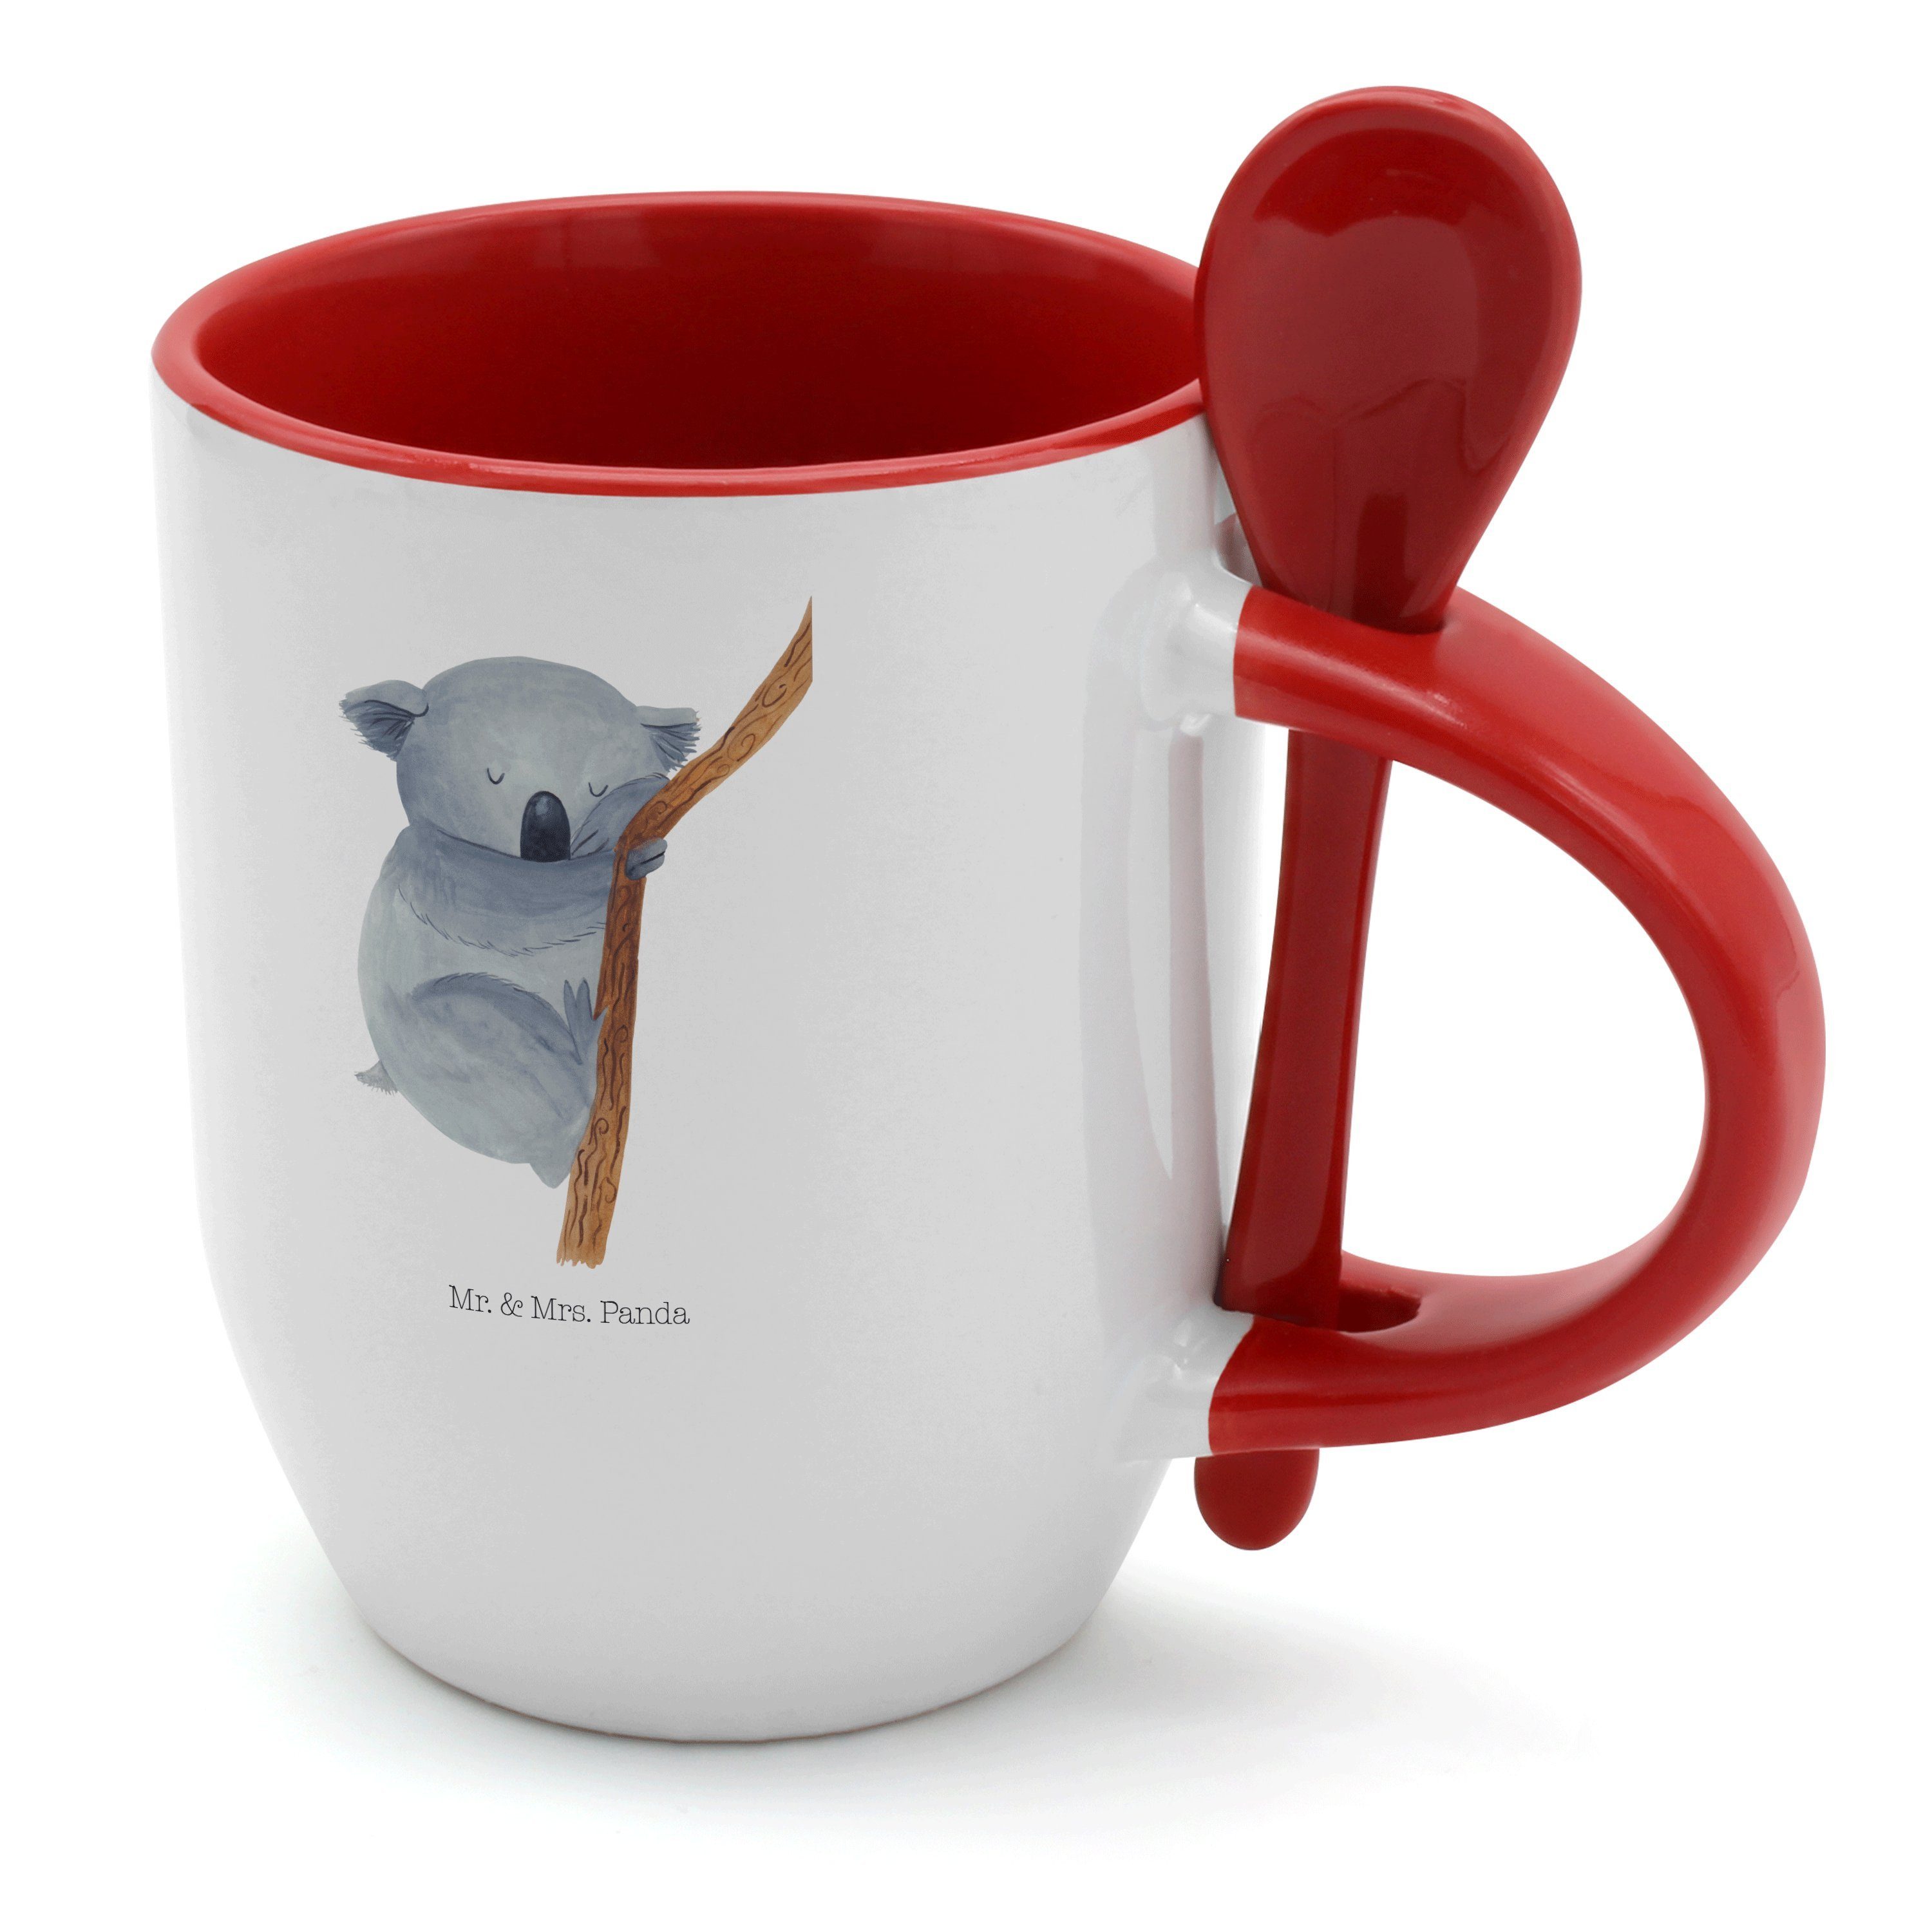 Mr. & Mrs. Panda Tasse - Keramik Tiermotive, - Ta, Weiß Geschenk, Tasse, Koalabär Tiere, Kaffeetasse